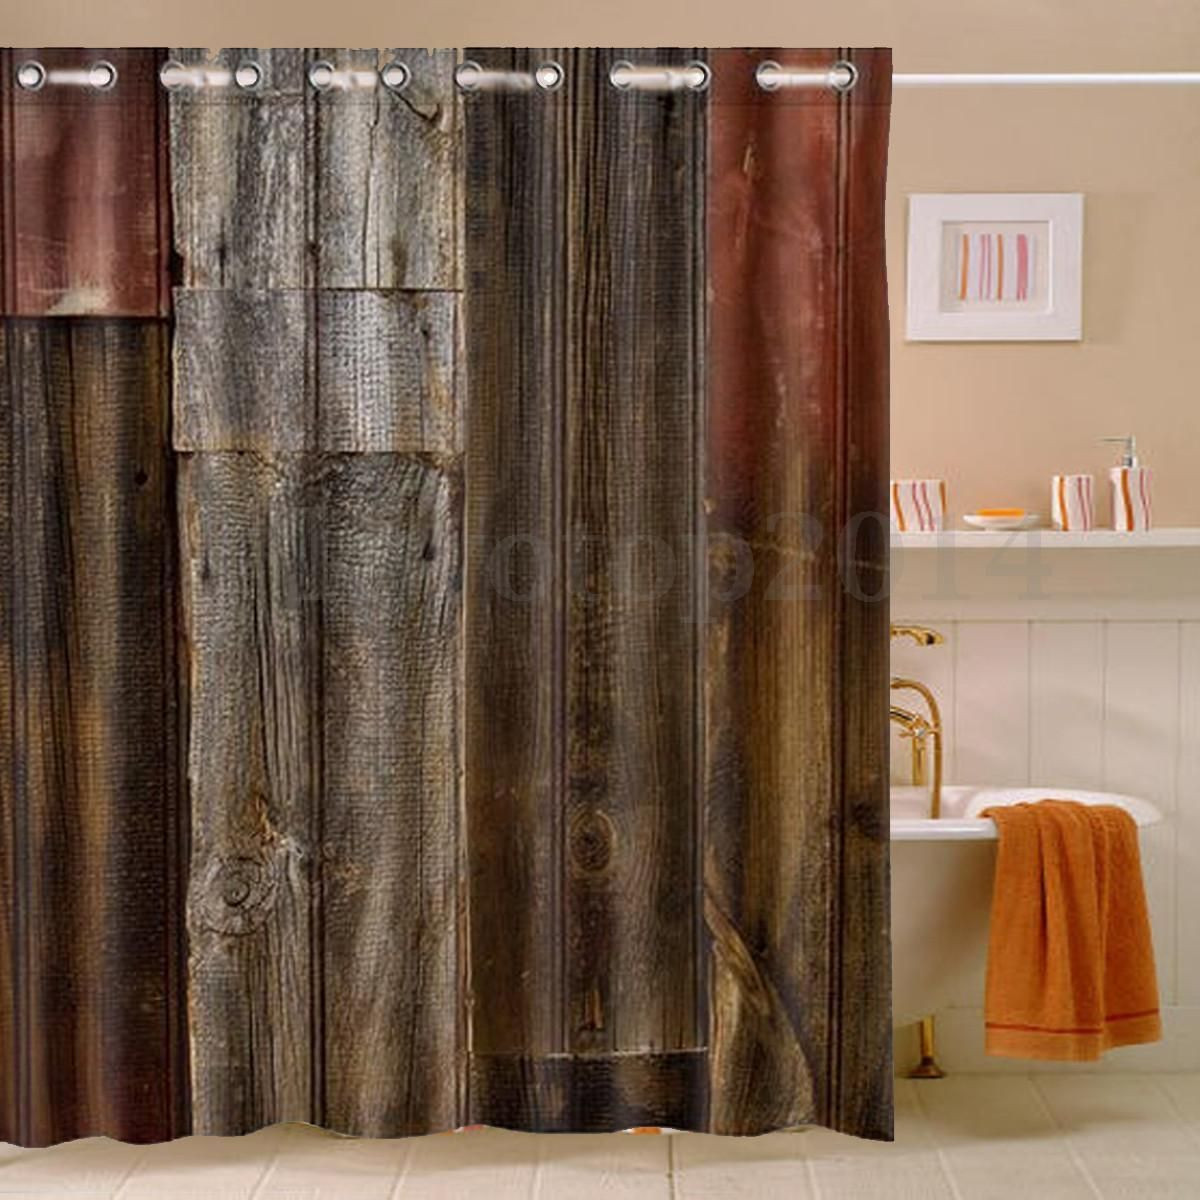 Rustic Bathroom Shower Curtain
 Rustic Old Barn Wood Waterproof Polyester Shower Curtain